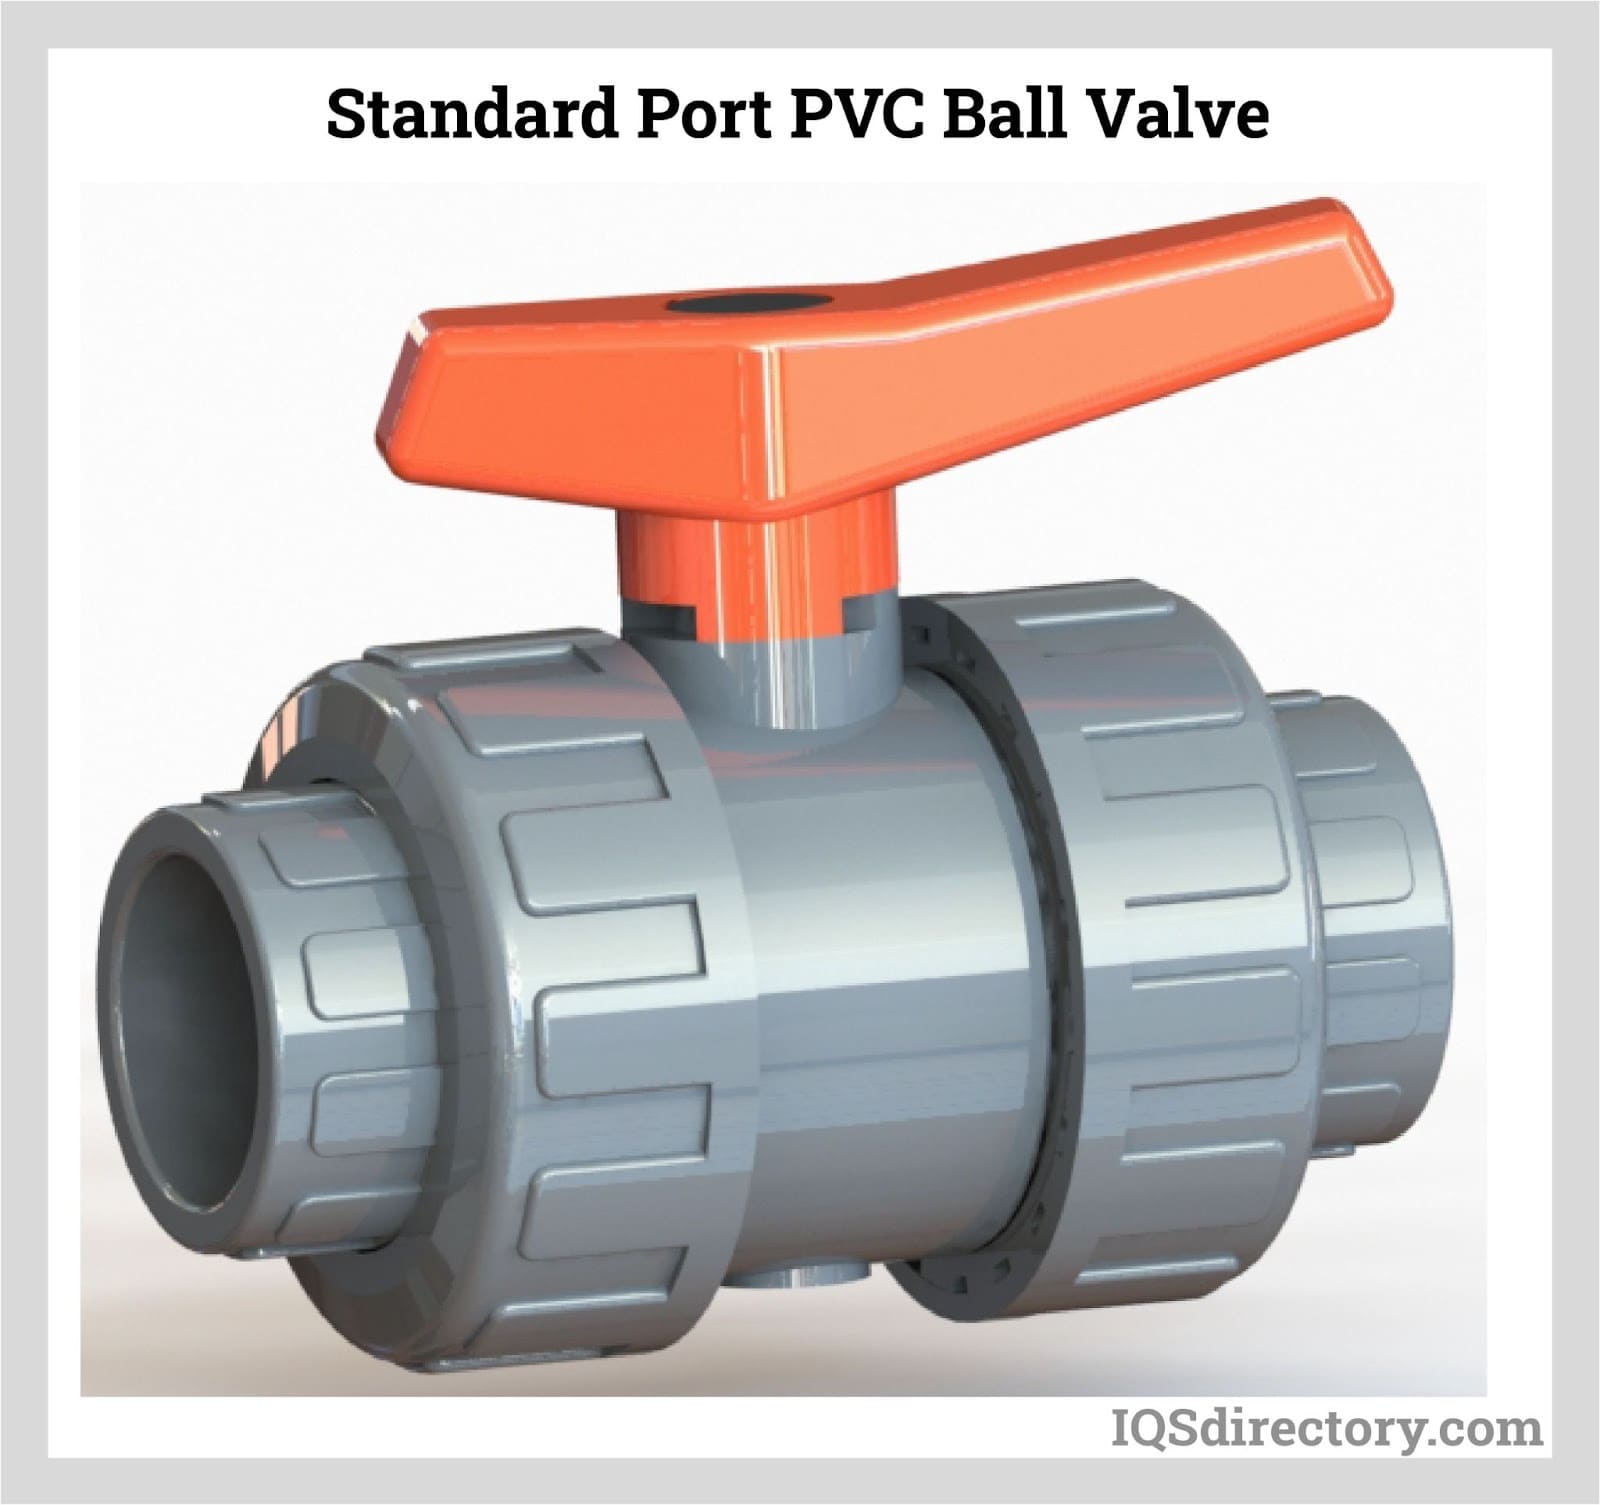 Standard Port PVC Ball Valve